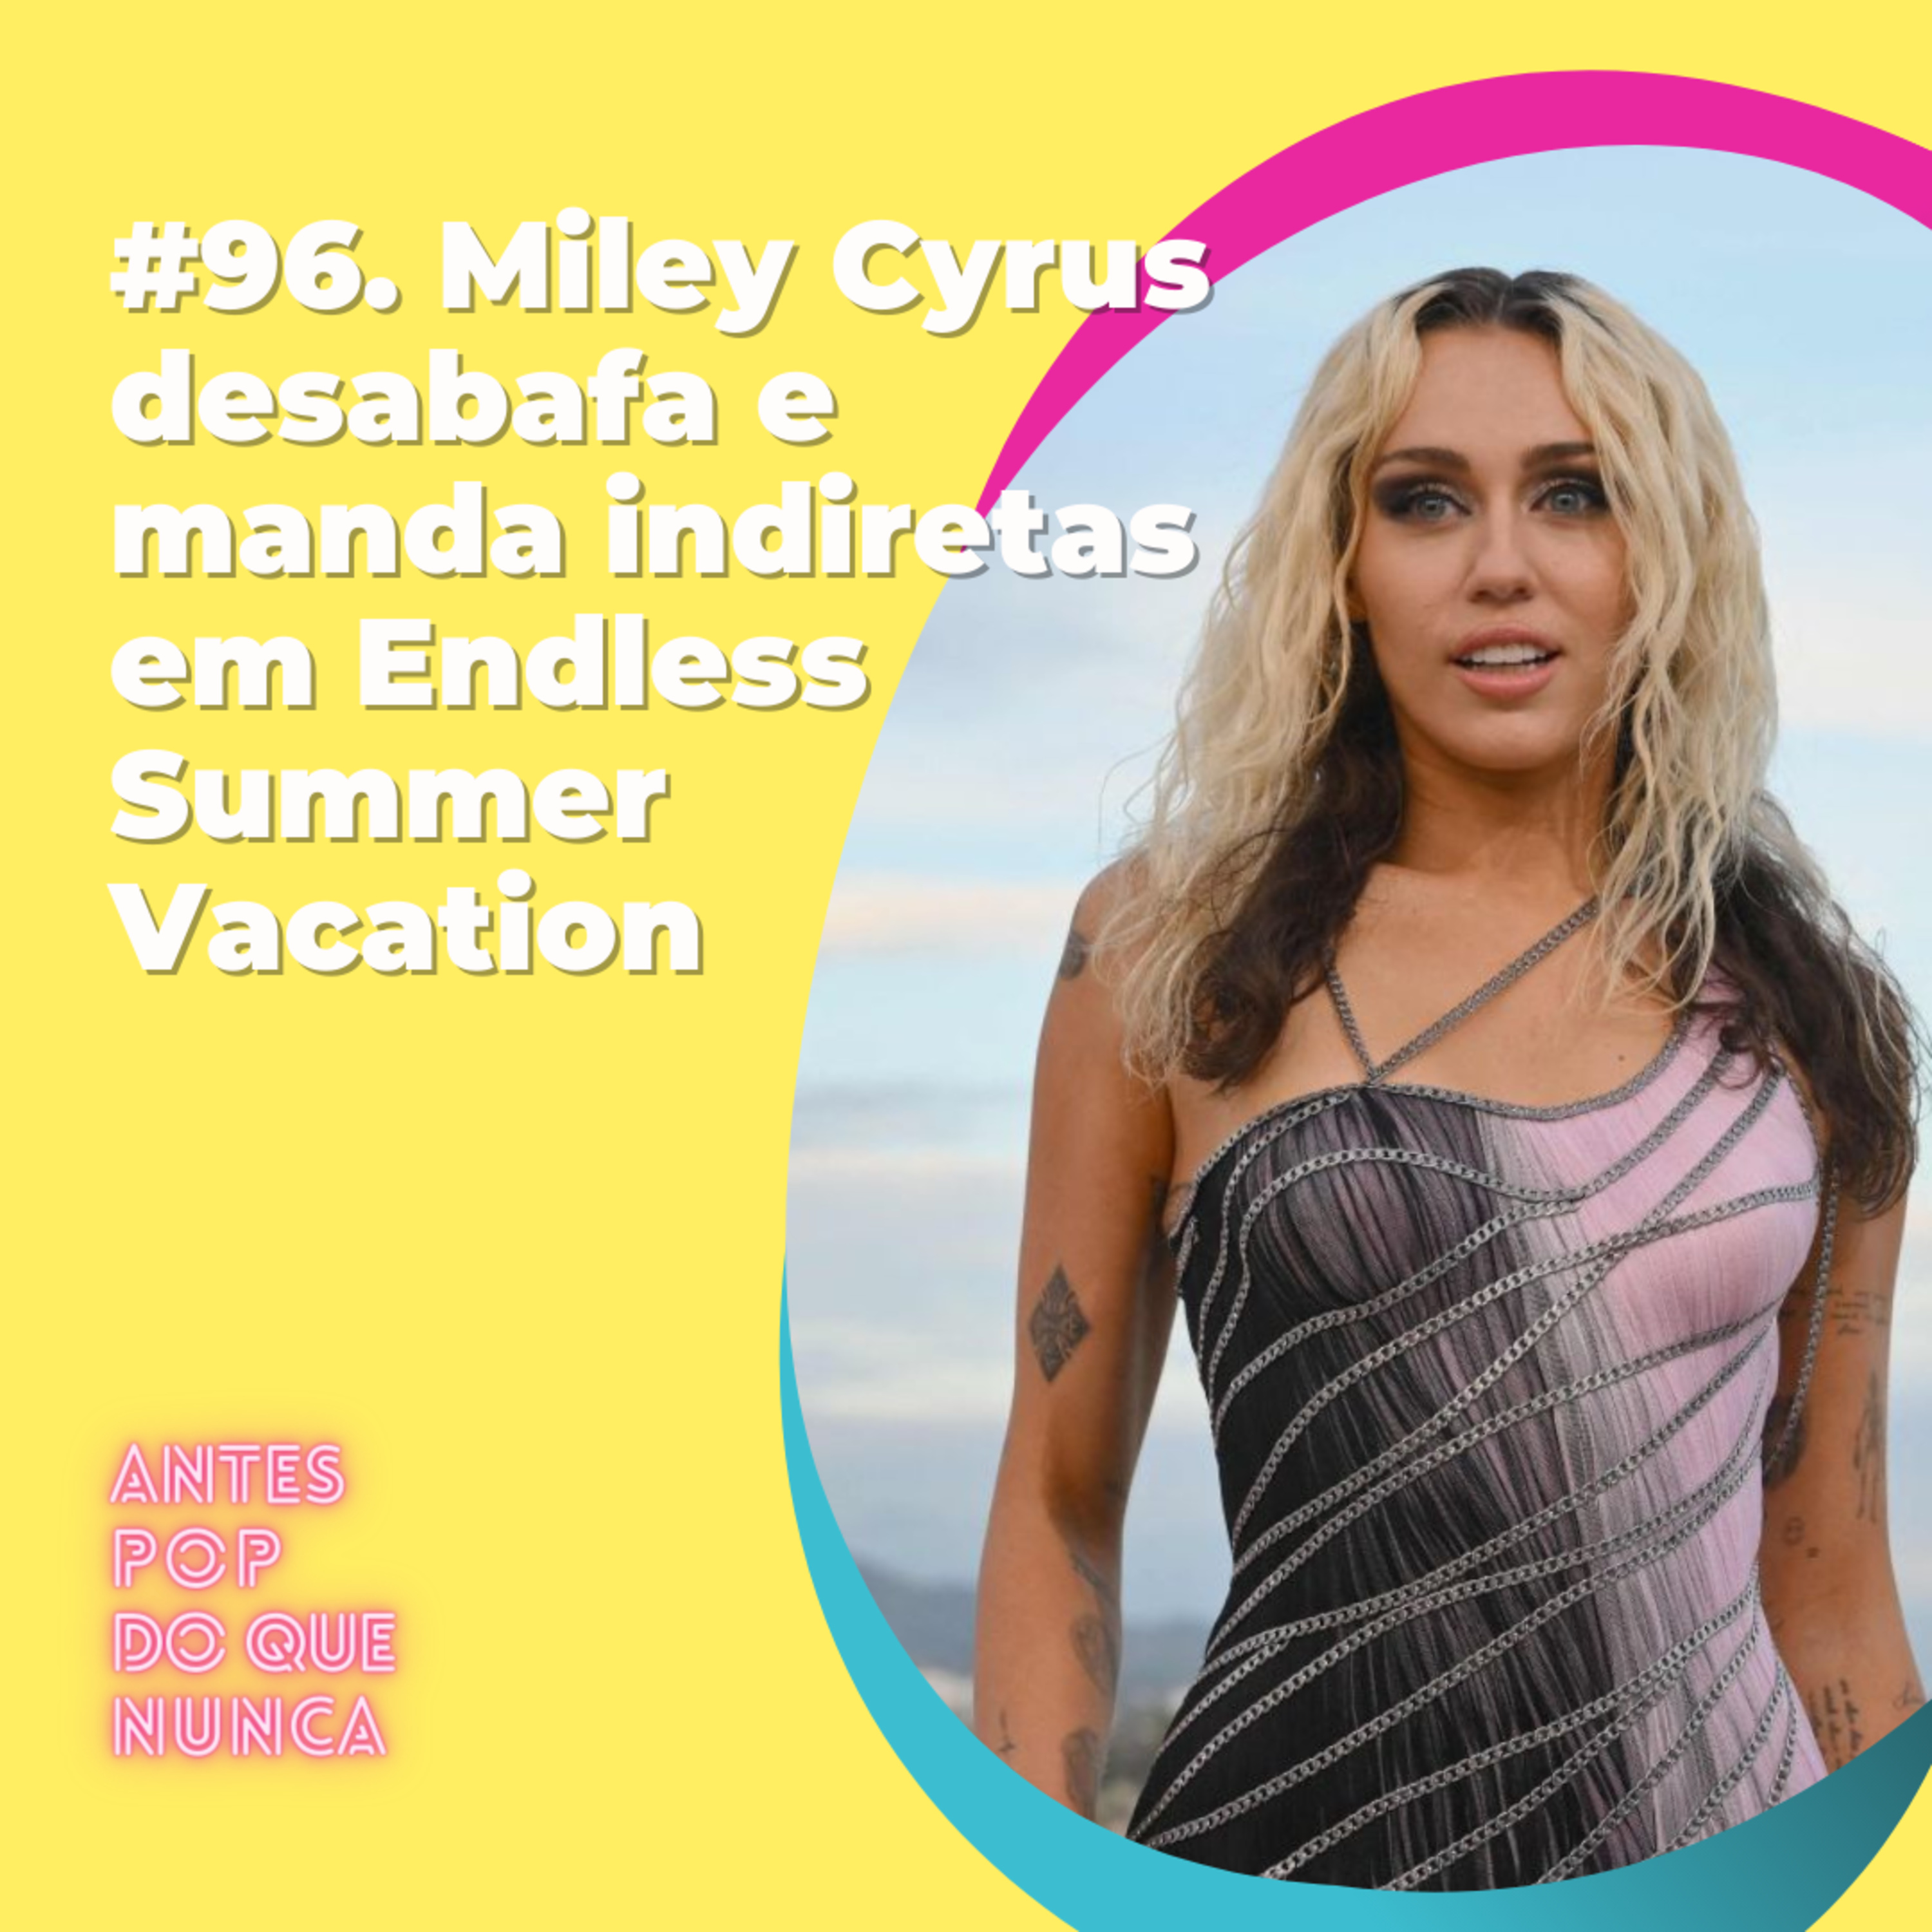 #96. Miley Cyrus desabafa e manda indiretas em Endless Summer Vacation